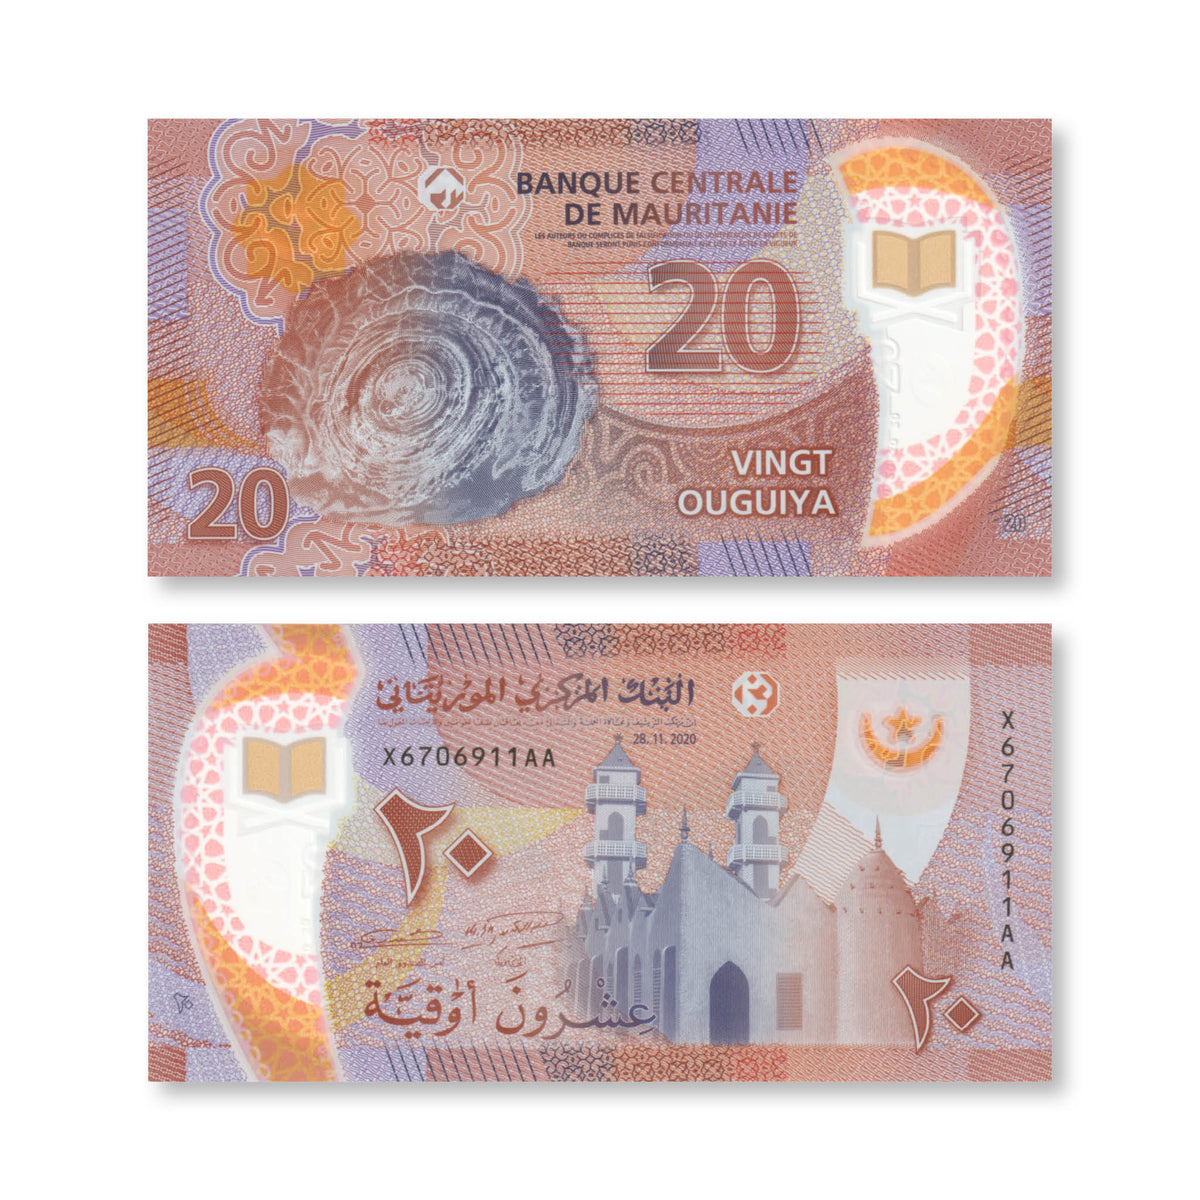 Mauritania 20 Ouguiya, 2020, B125.5a, UNC - Robert's World Money - World Banknotes